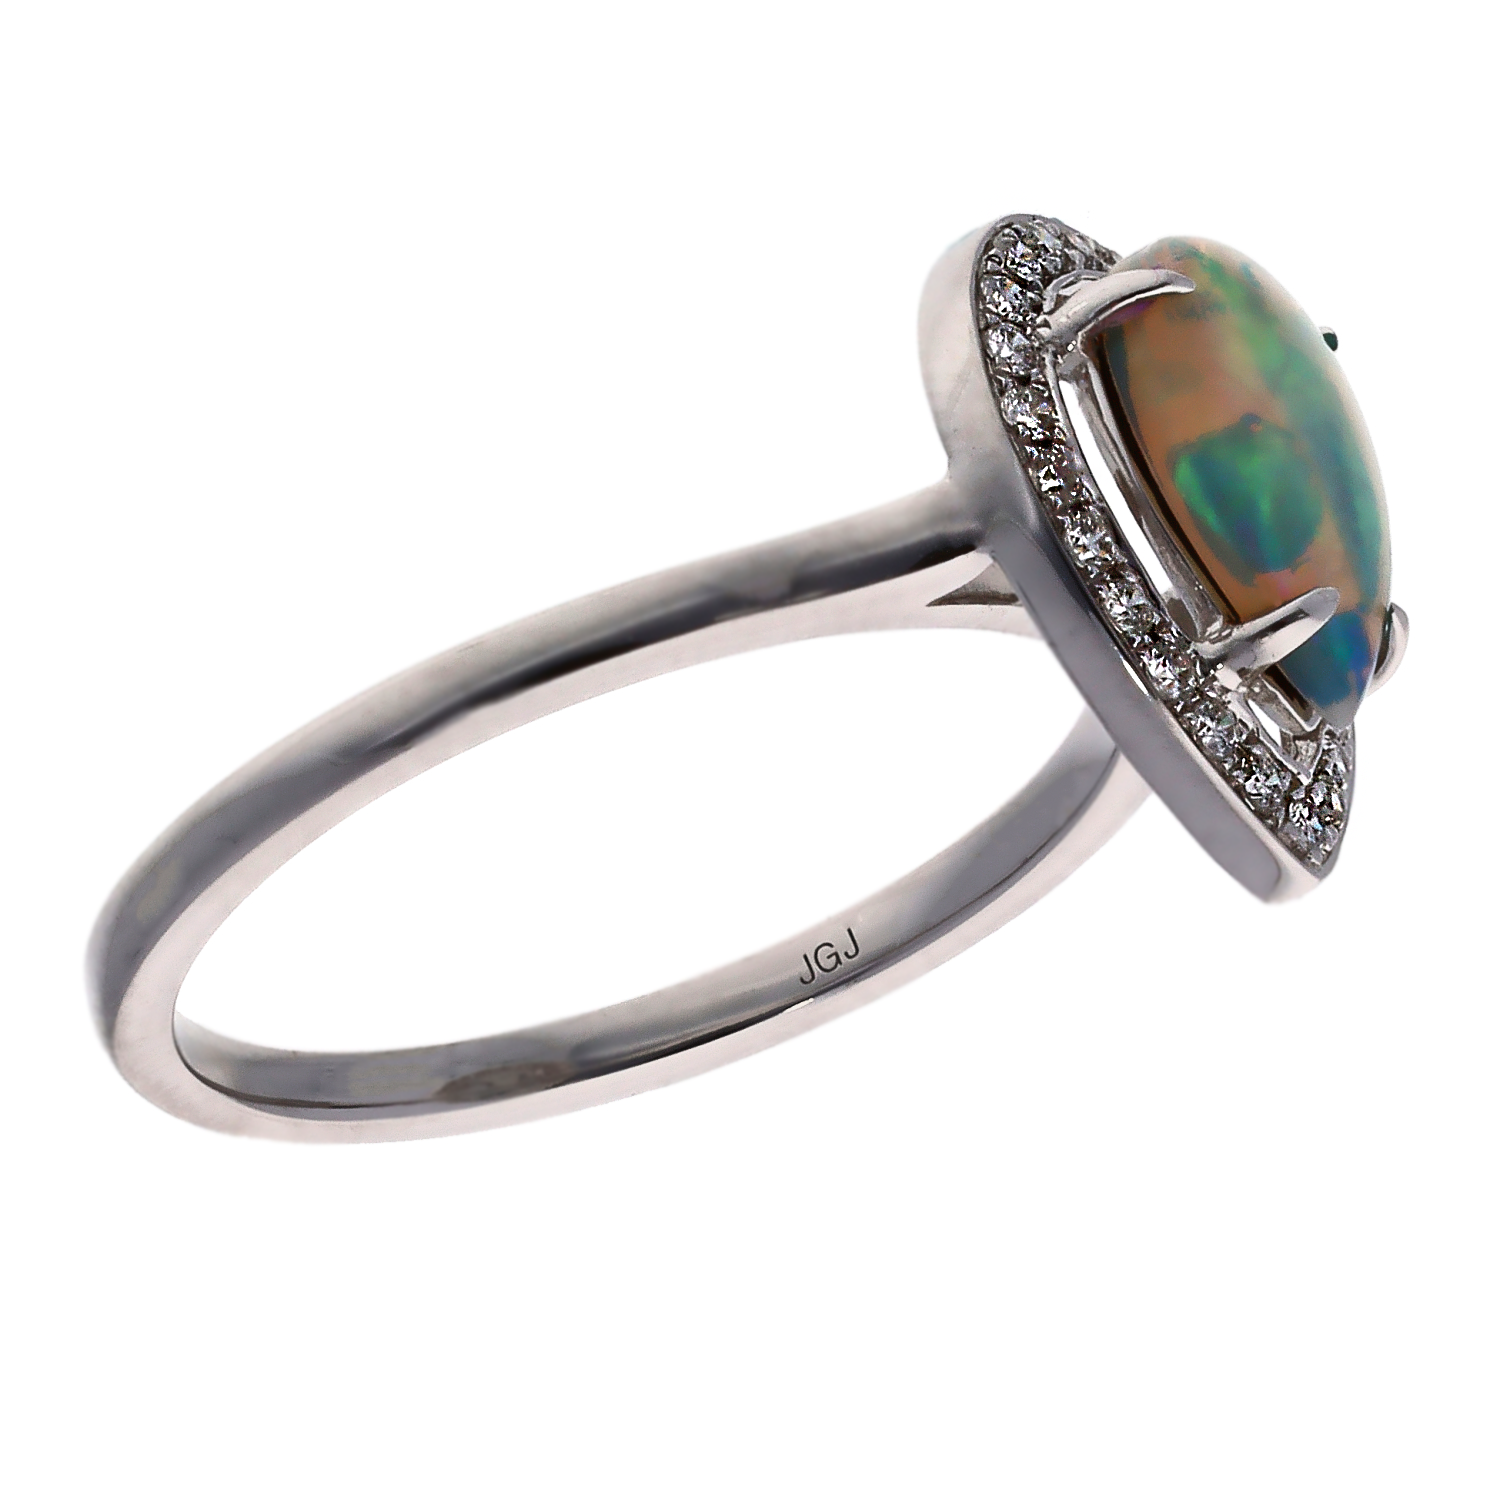 14K White Gold Pear Shaped Opal w/Diamond Halo Ring